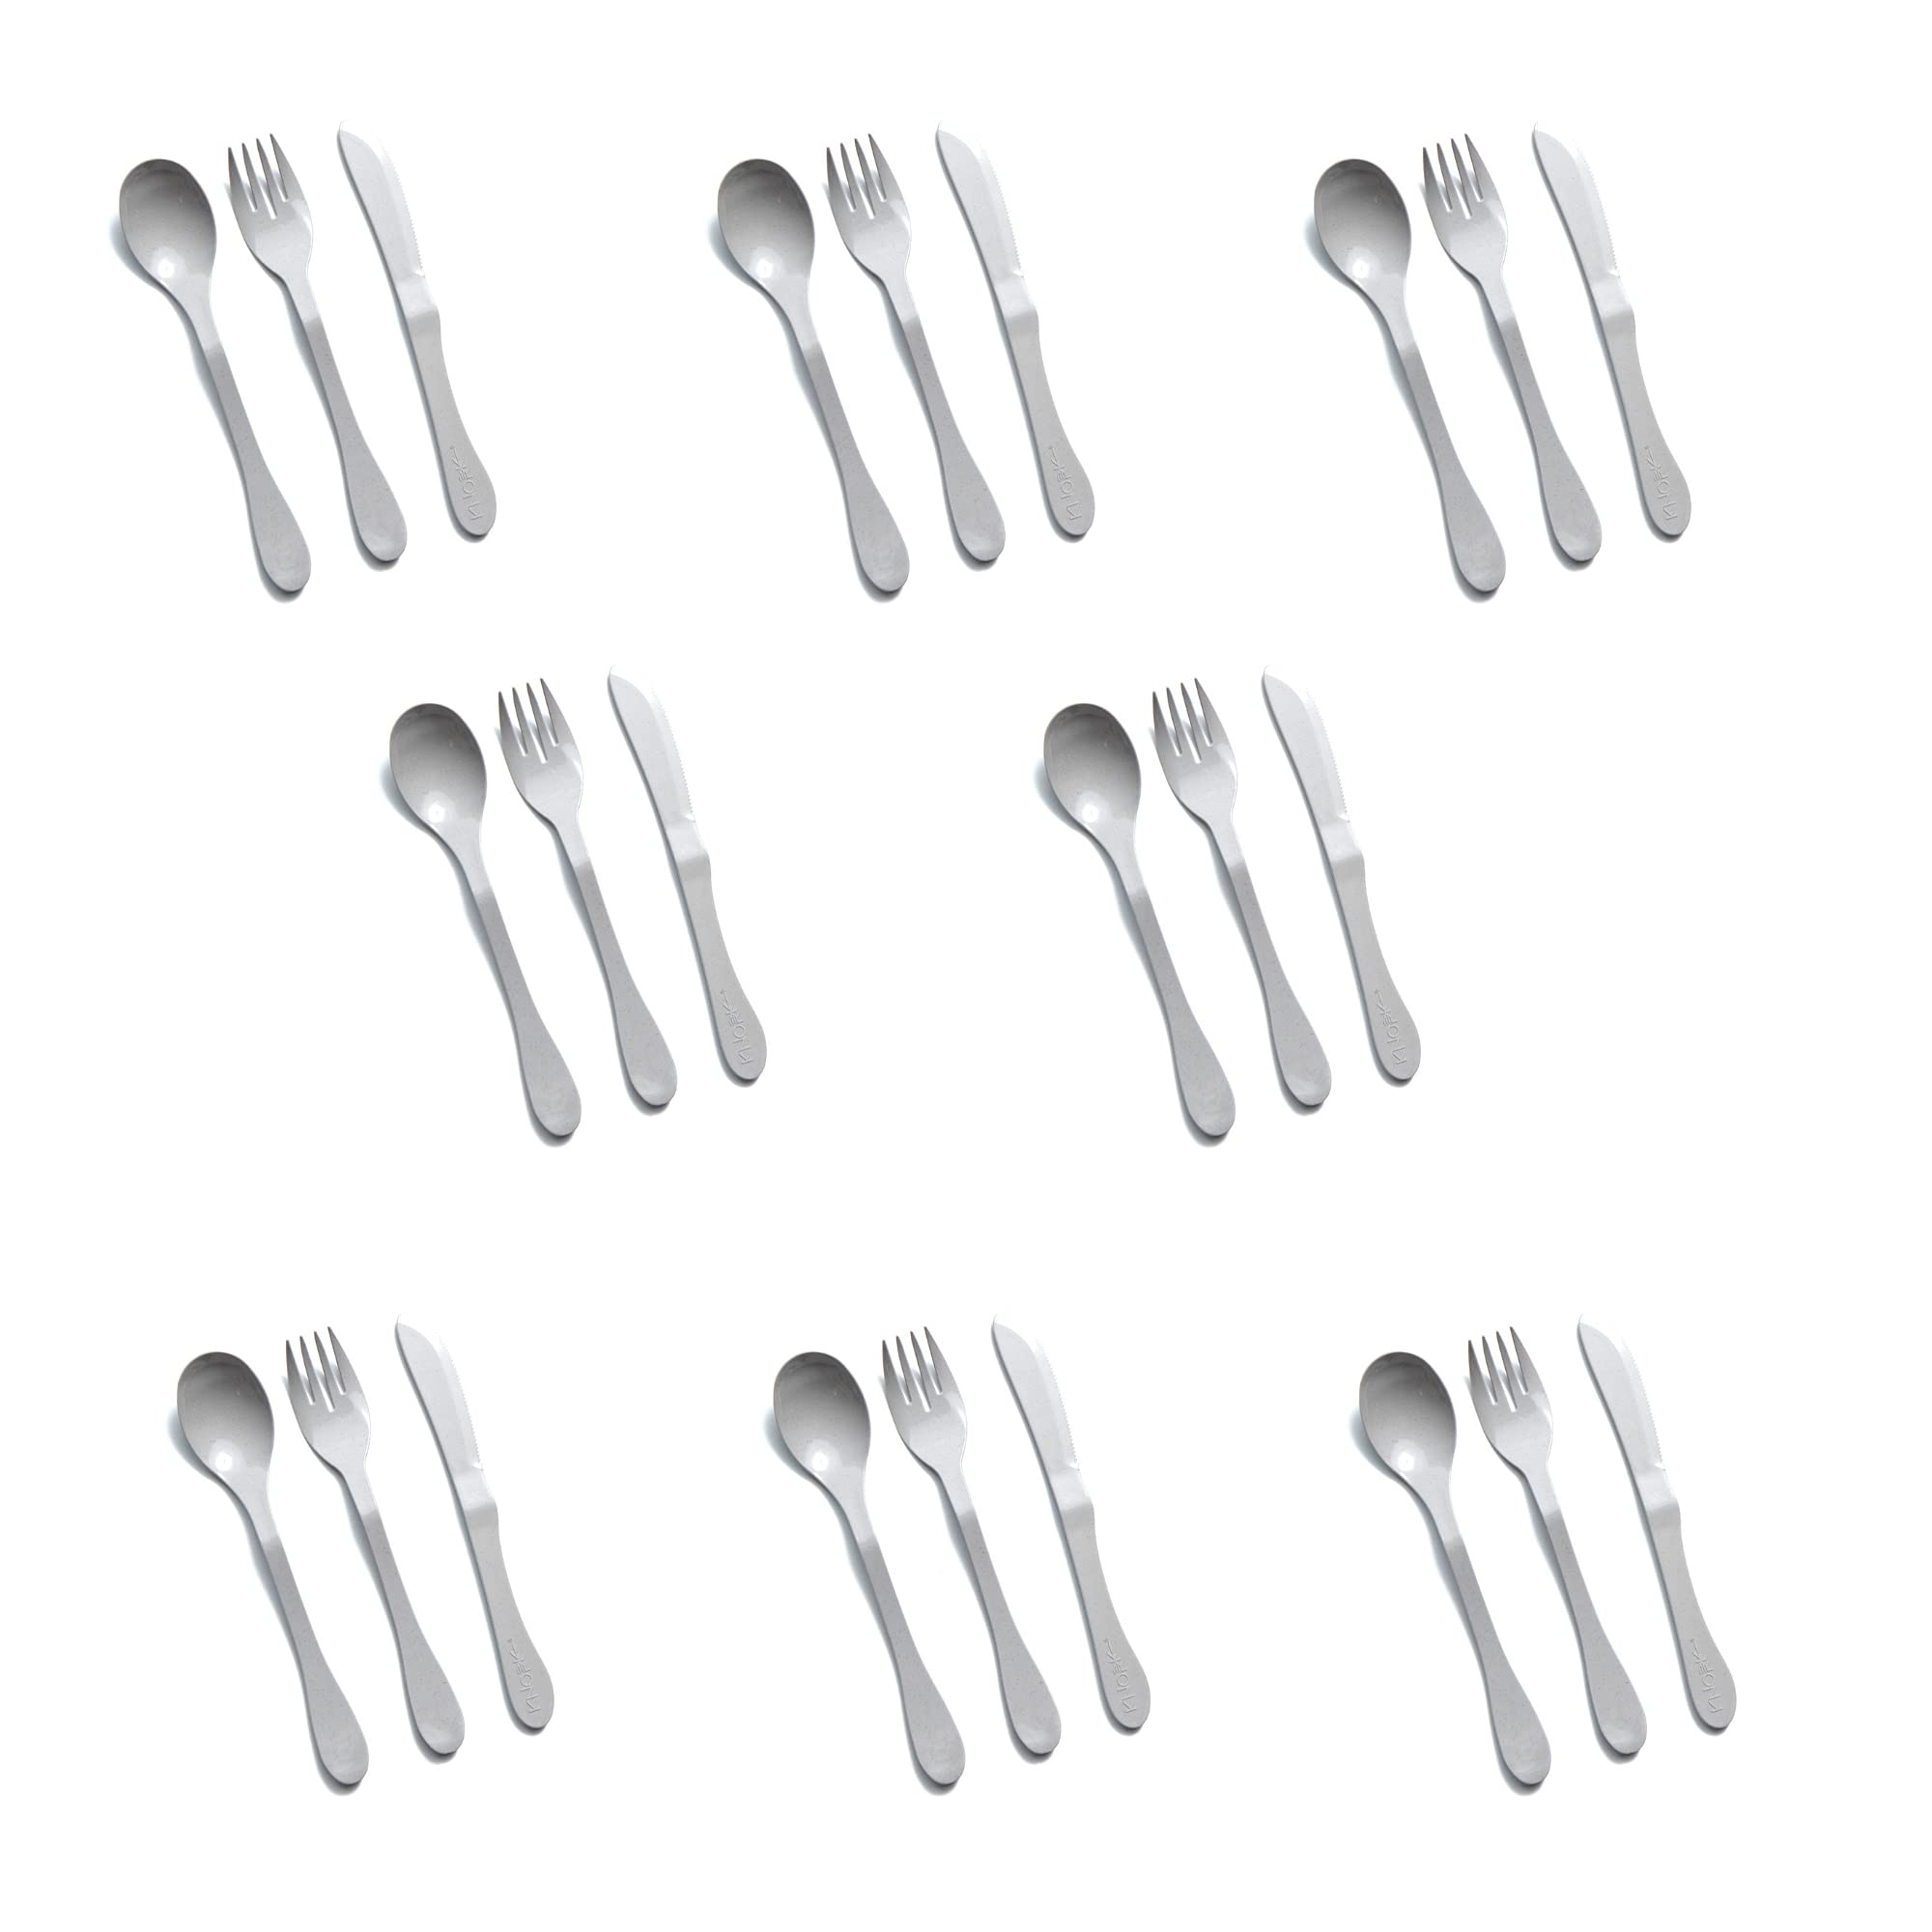 KNORK Eco 24 Piece (Fork, Knife, Spoon) Plant Based CutleryBamboo Reusable Flatware Set, Gray